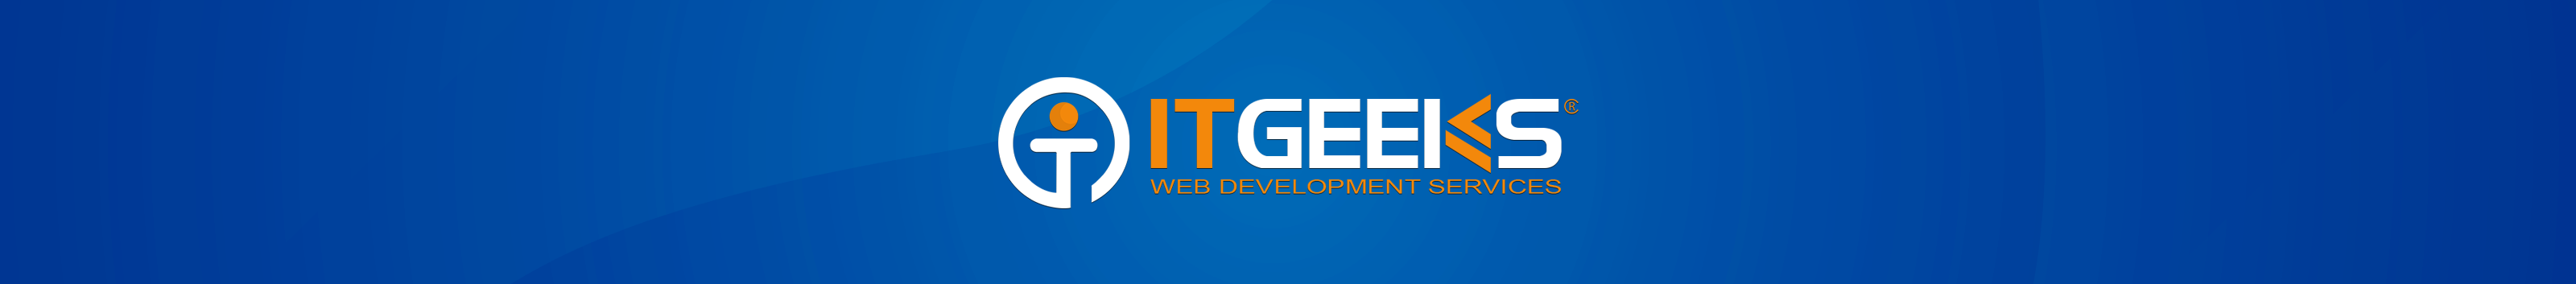 IT Geeks's profile banner